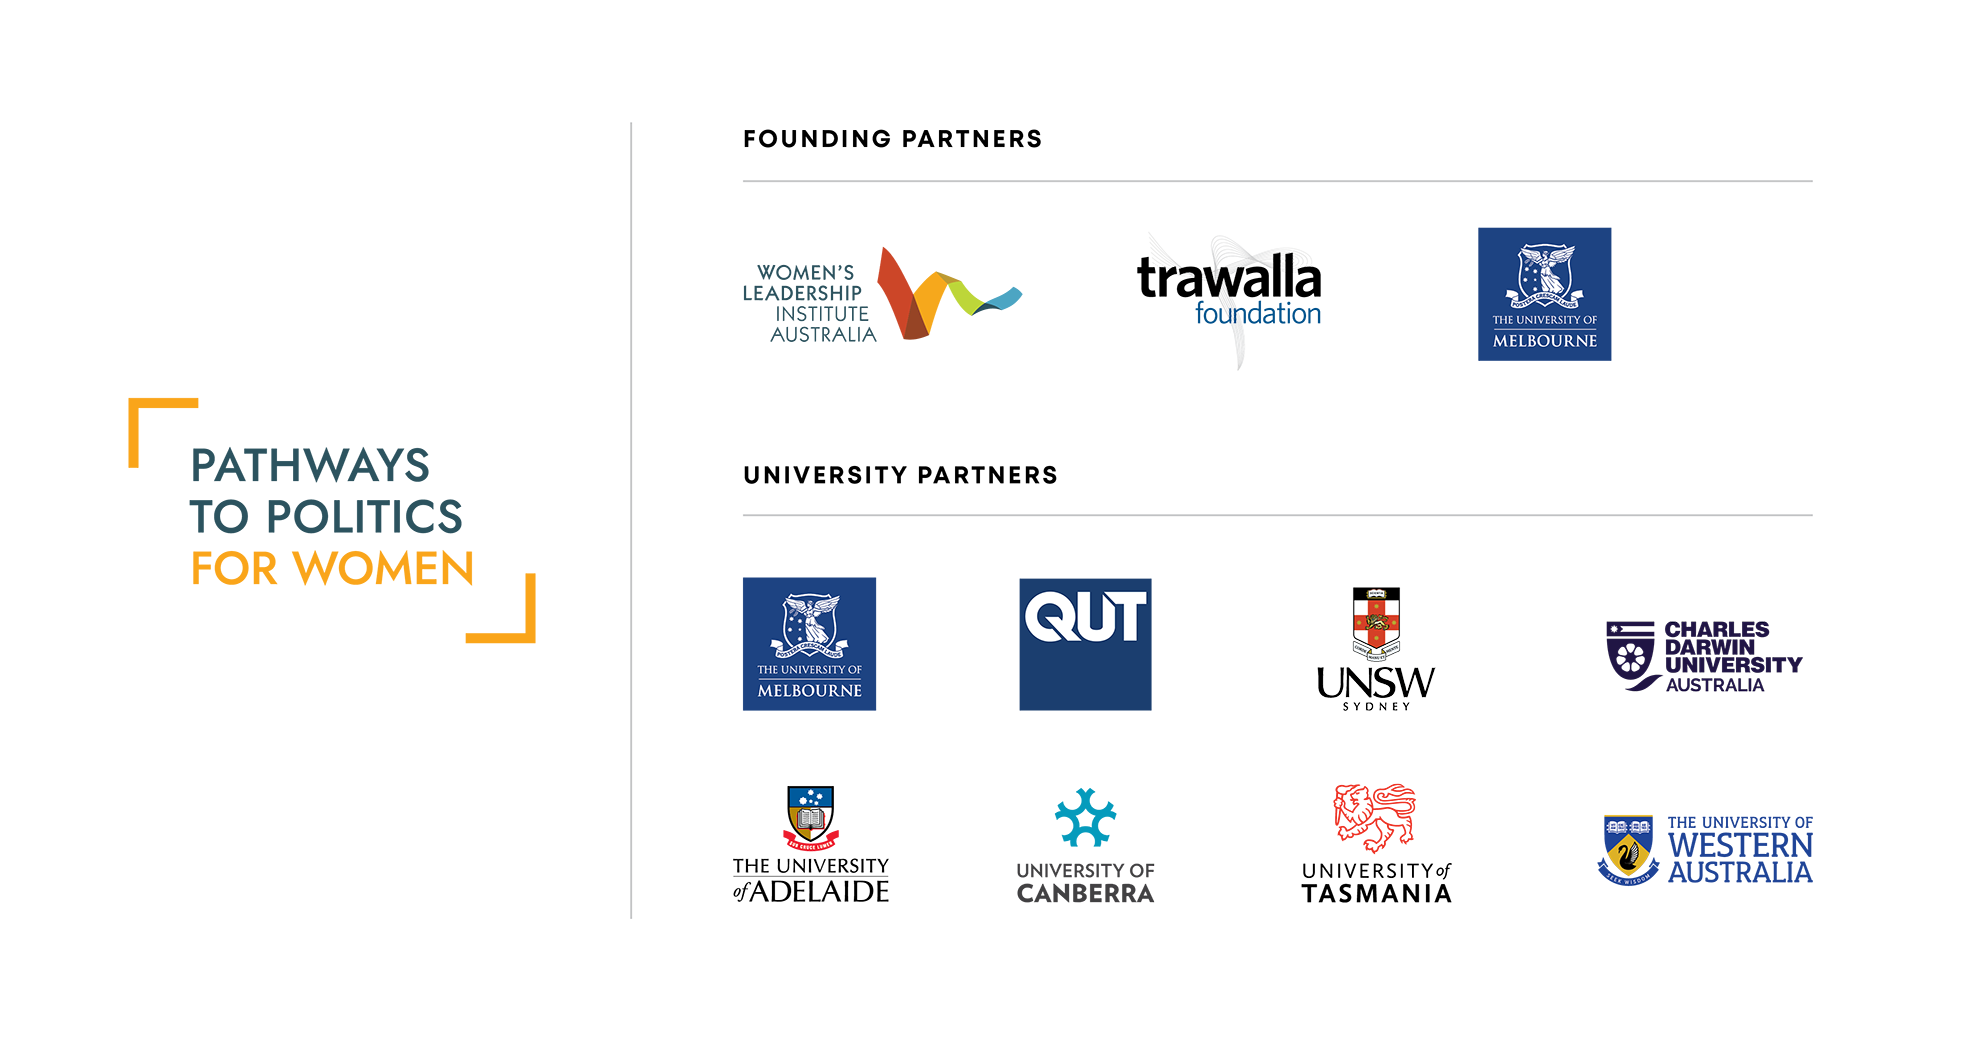 Founding partner logos